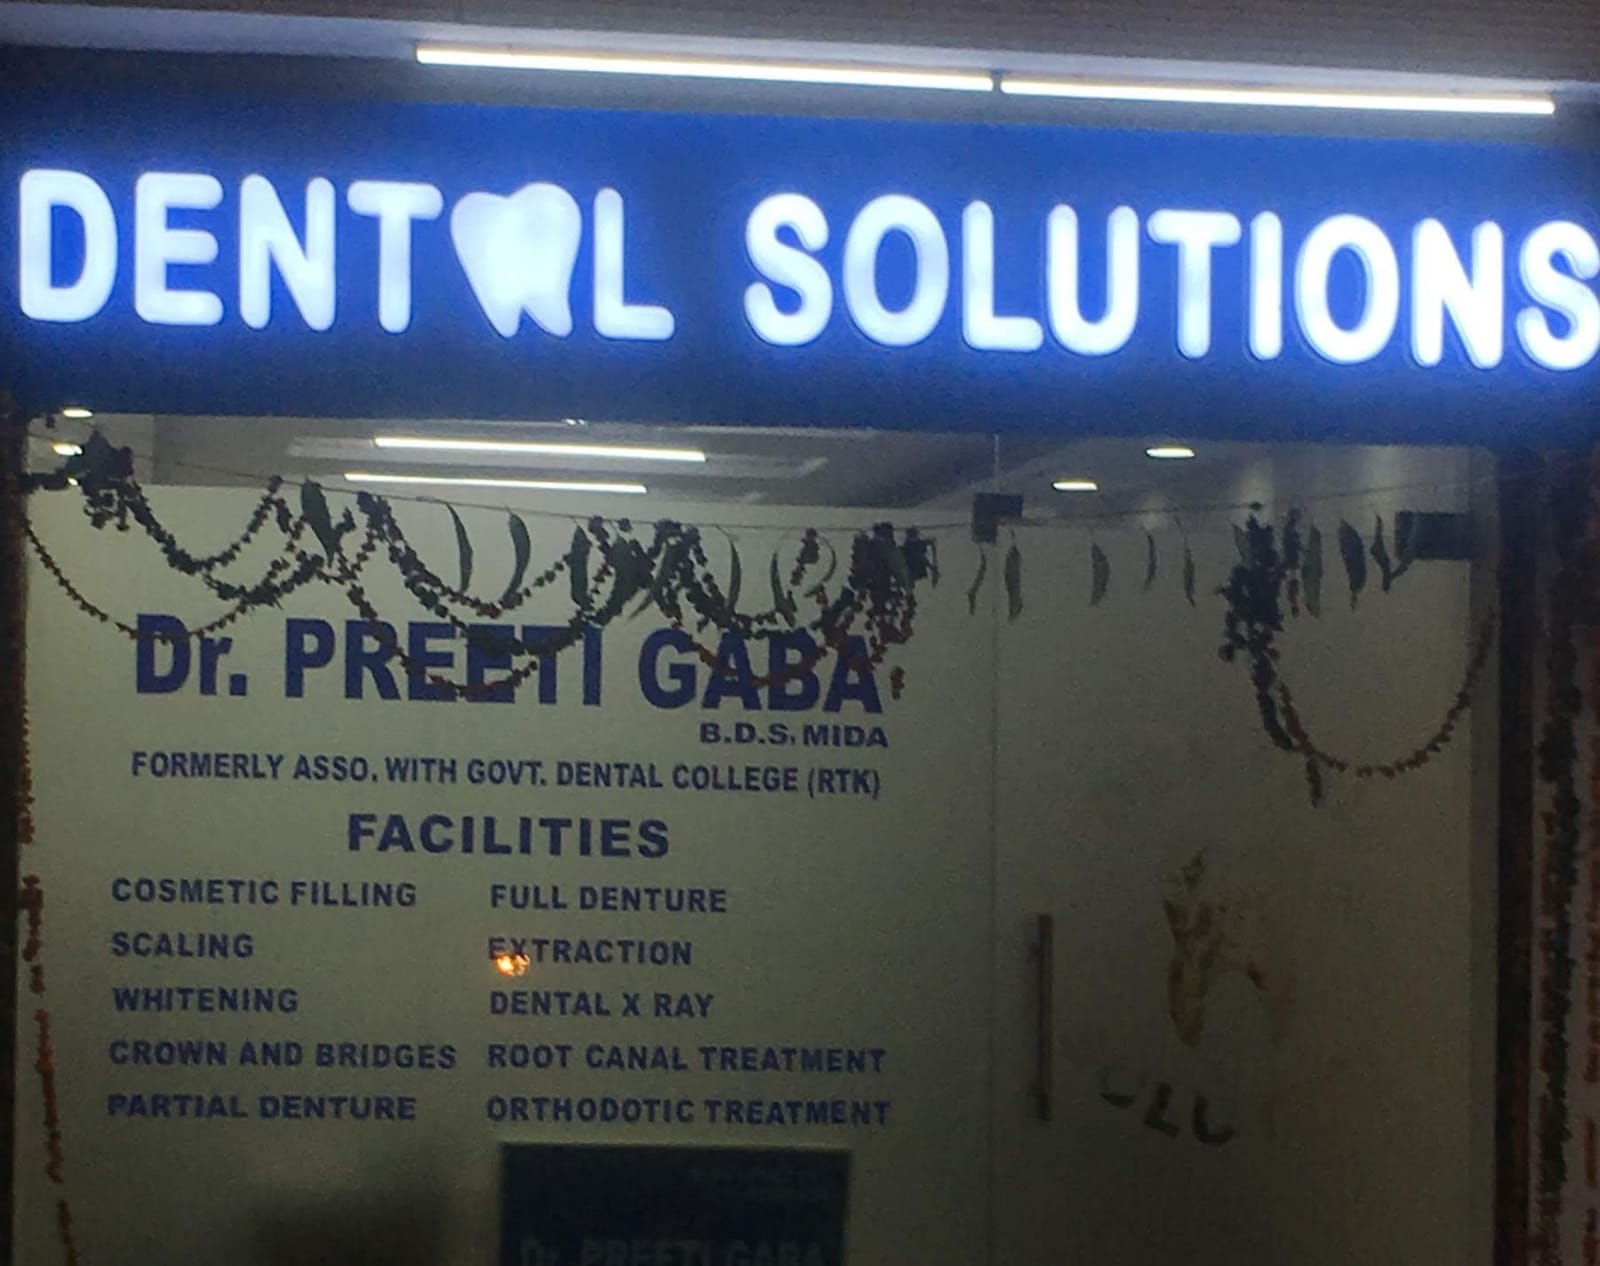 Outside Area - Dental Solutions, West Patel Nagar